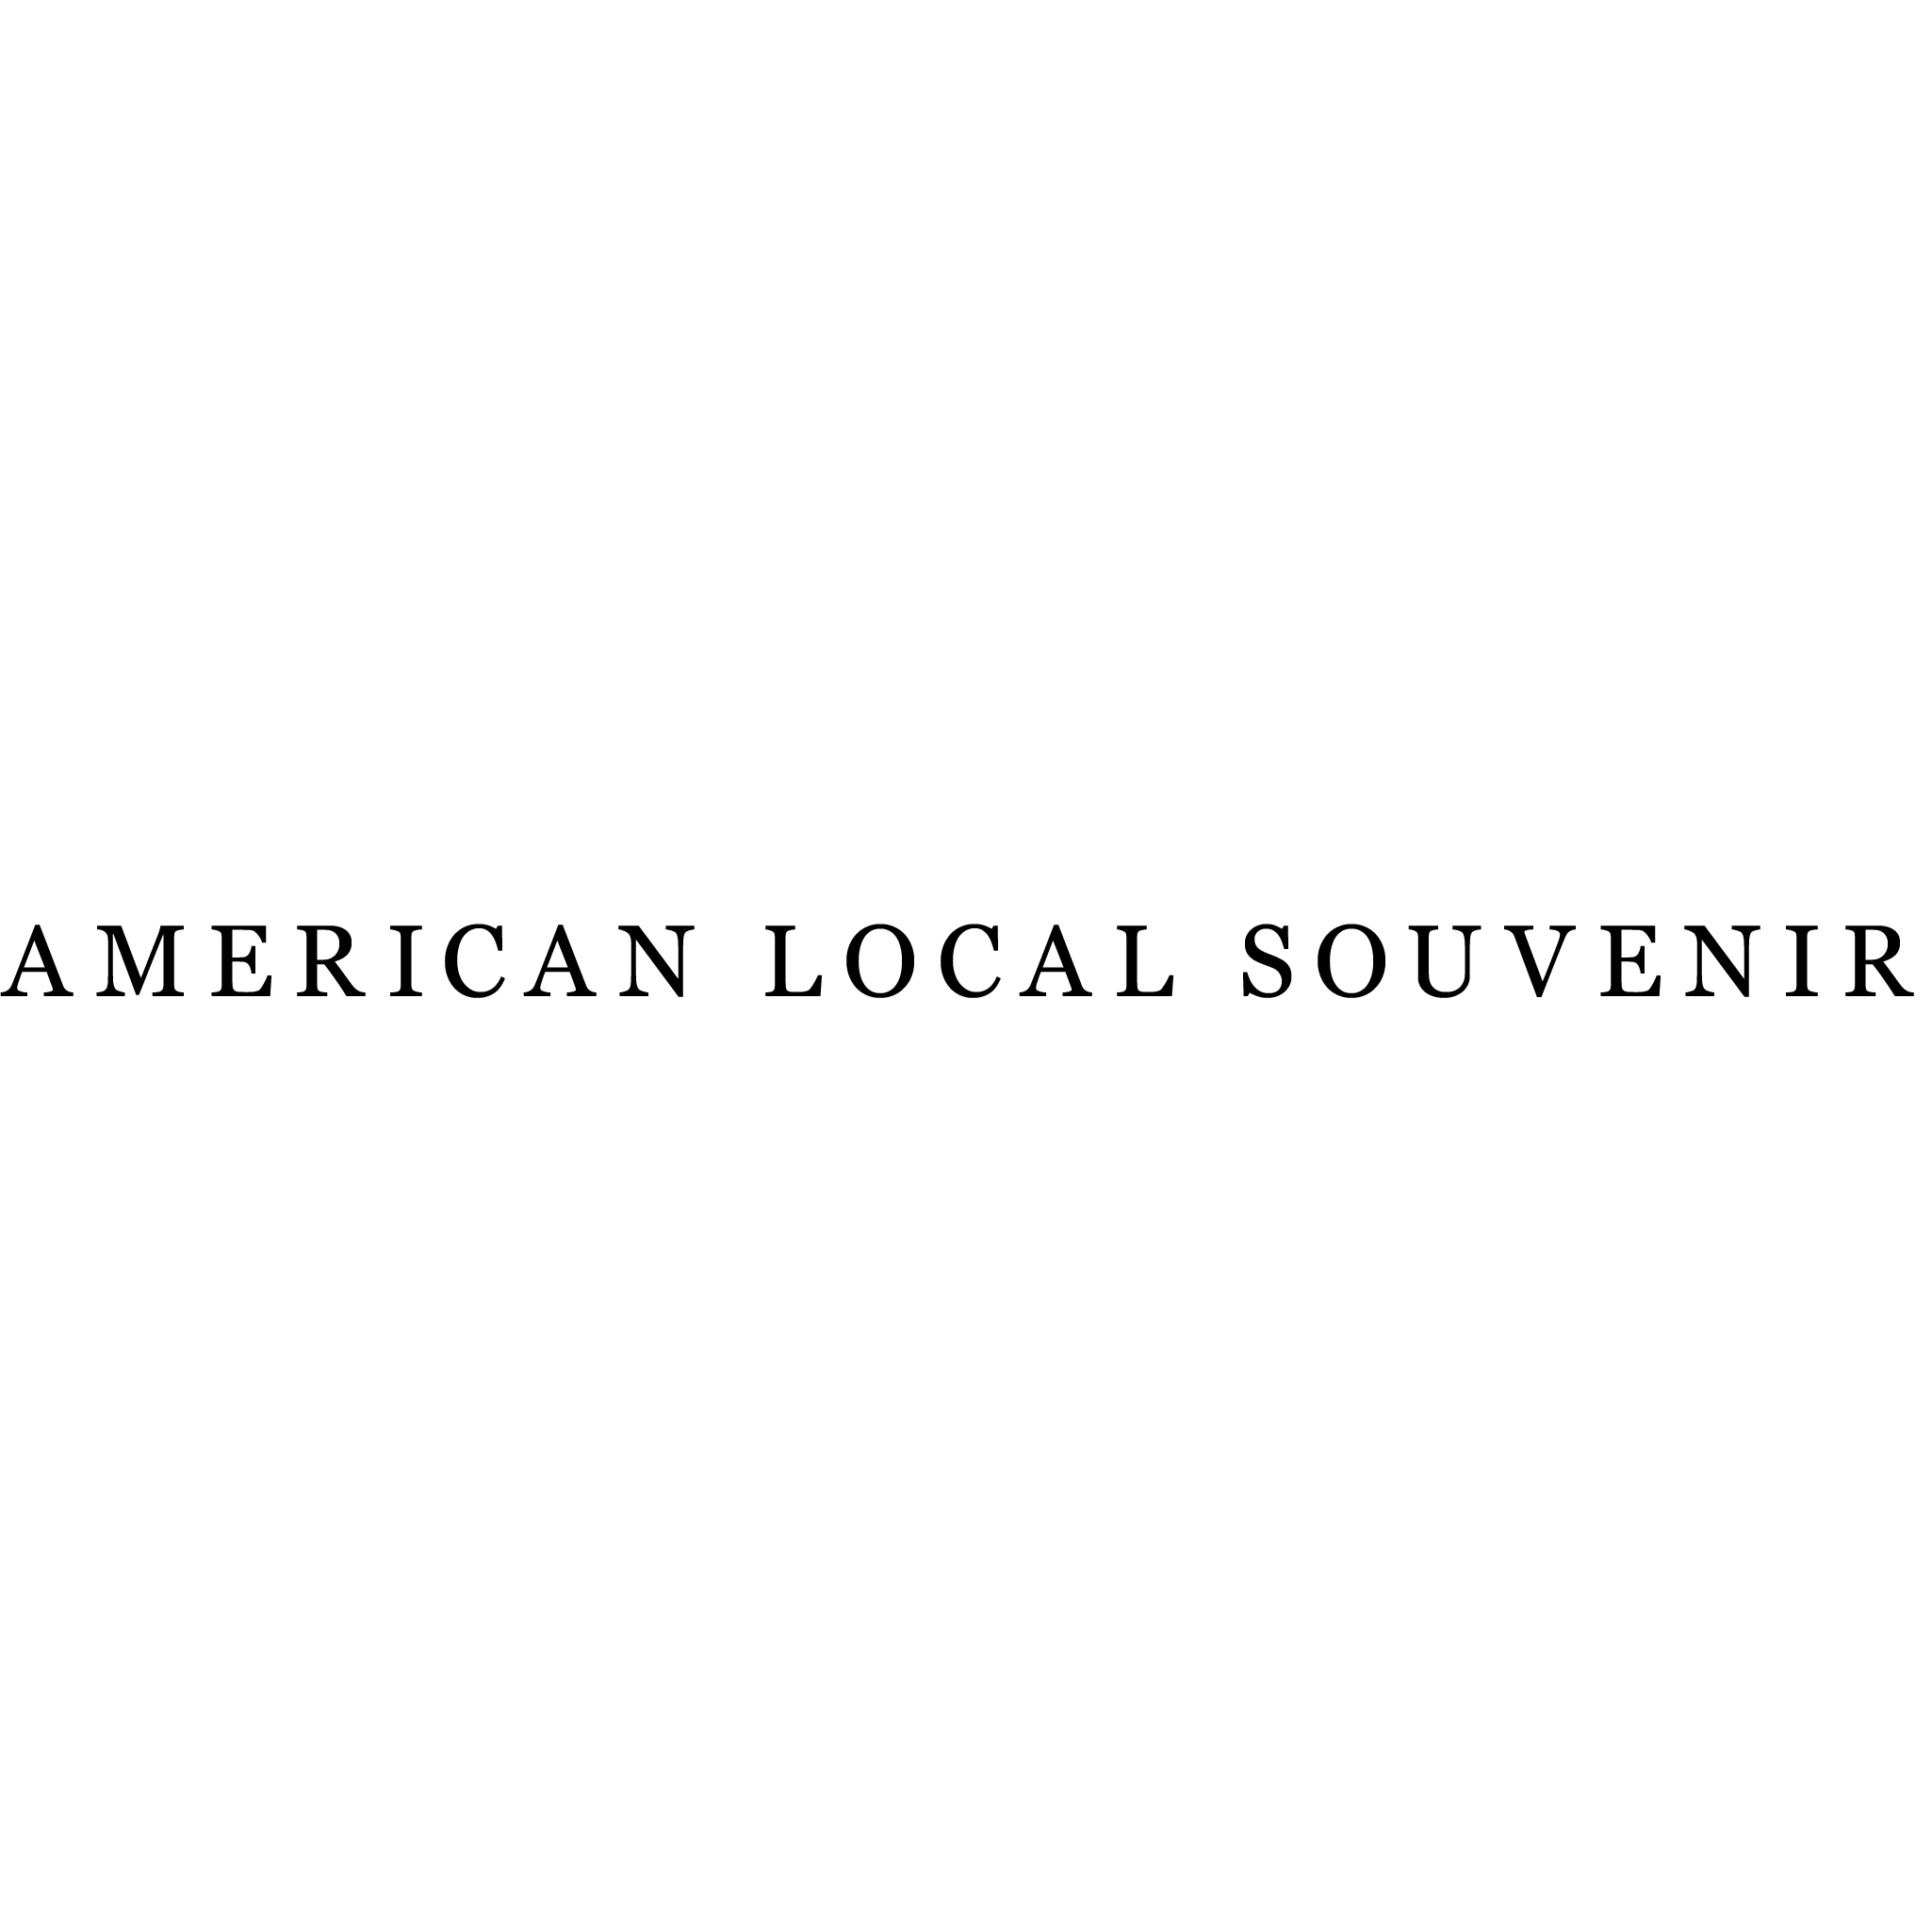 AMERICAN LOCAL SOUVENIR